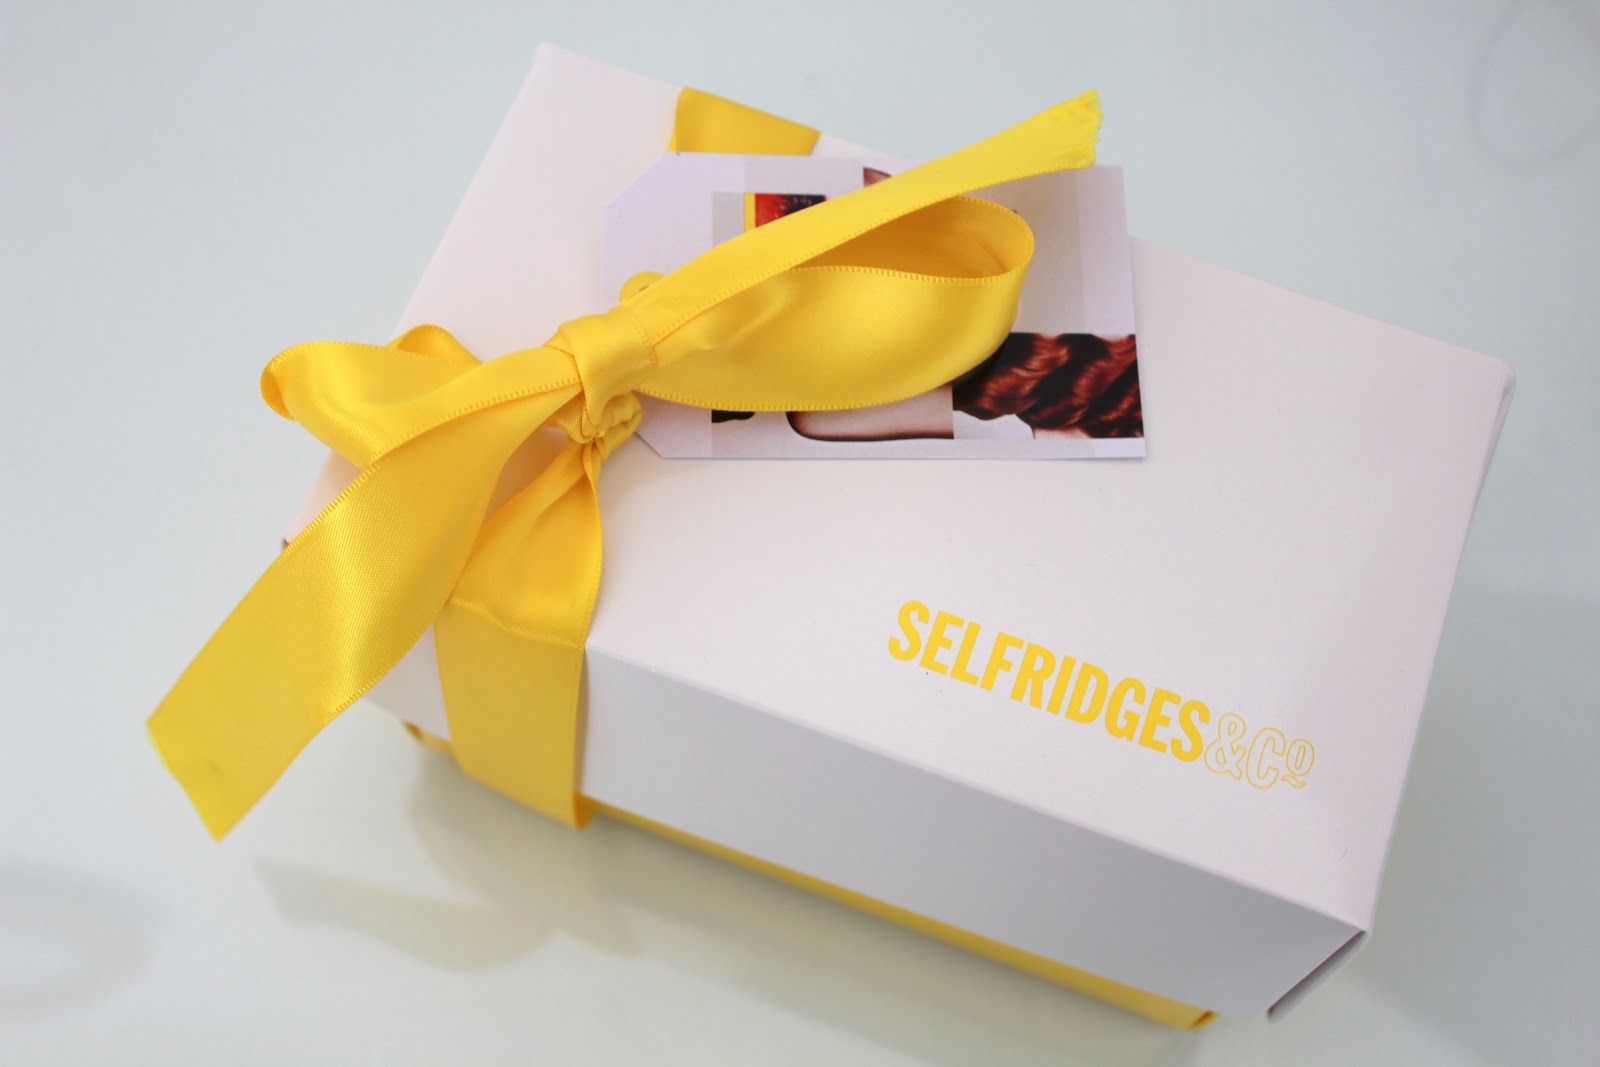 *CLOSED* Selfridge's Beauty Box....Giveaway!!